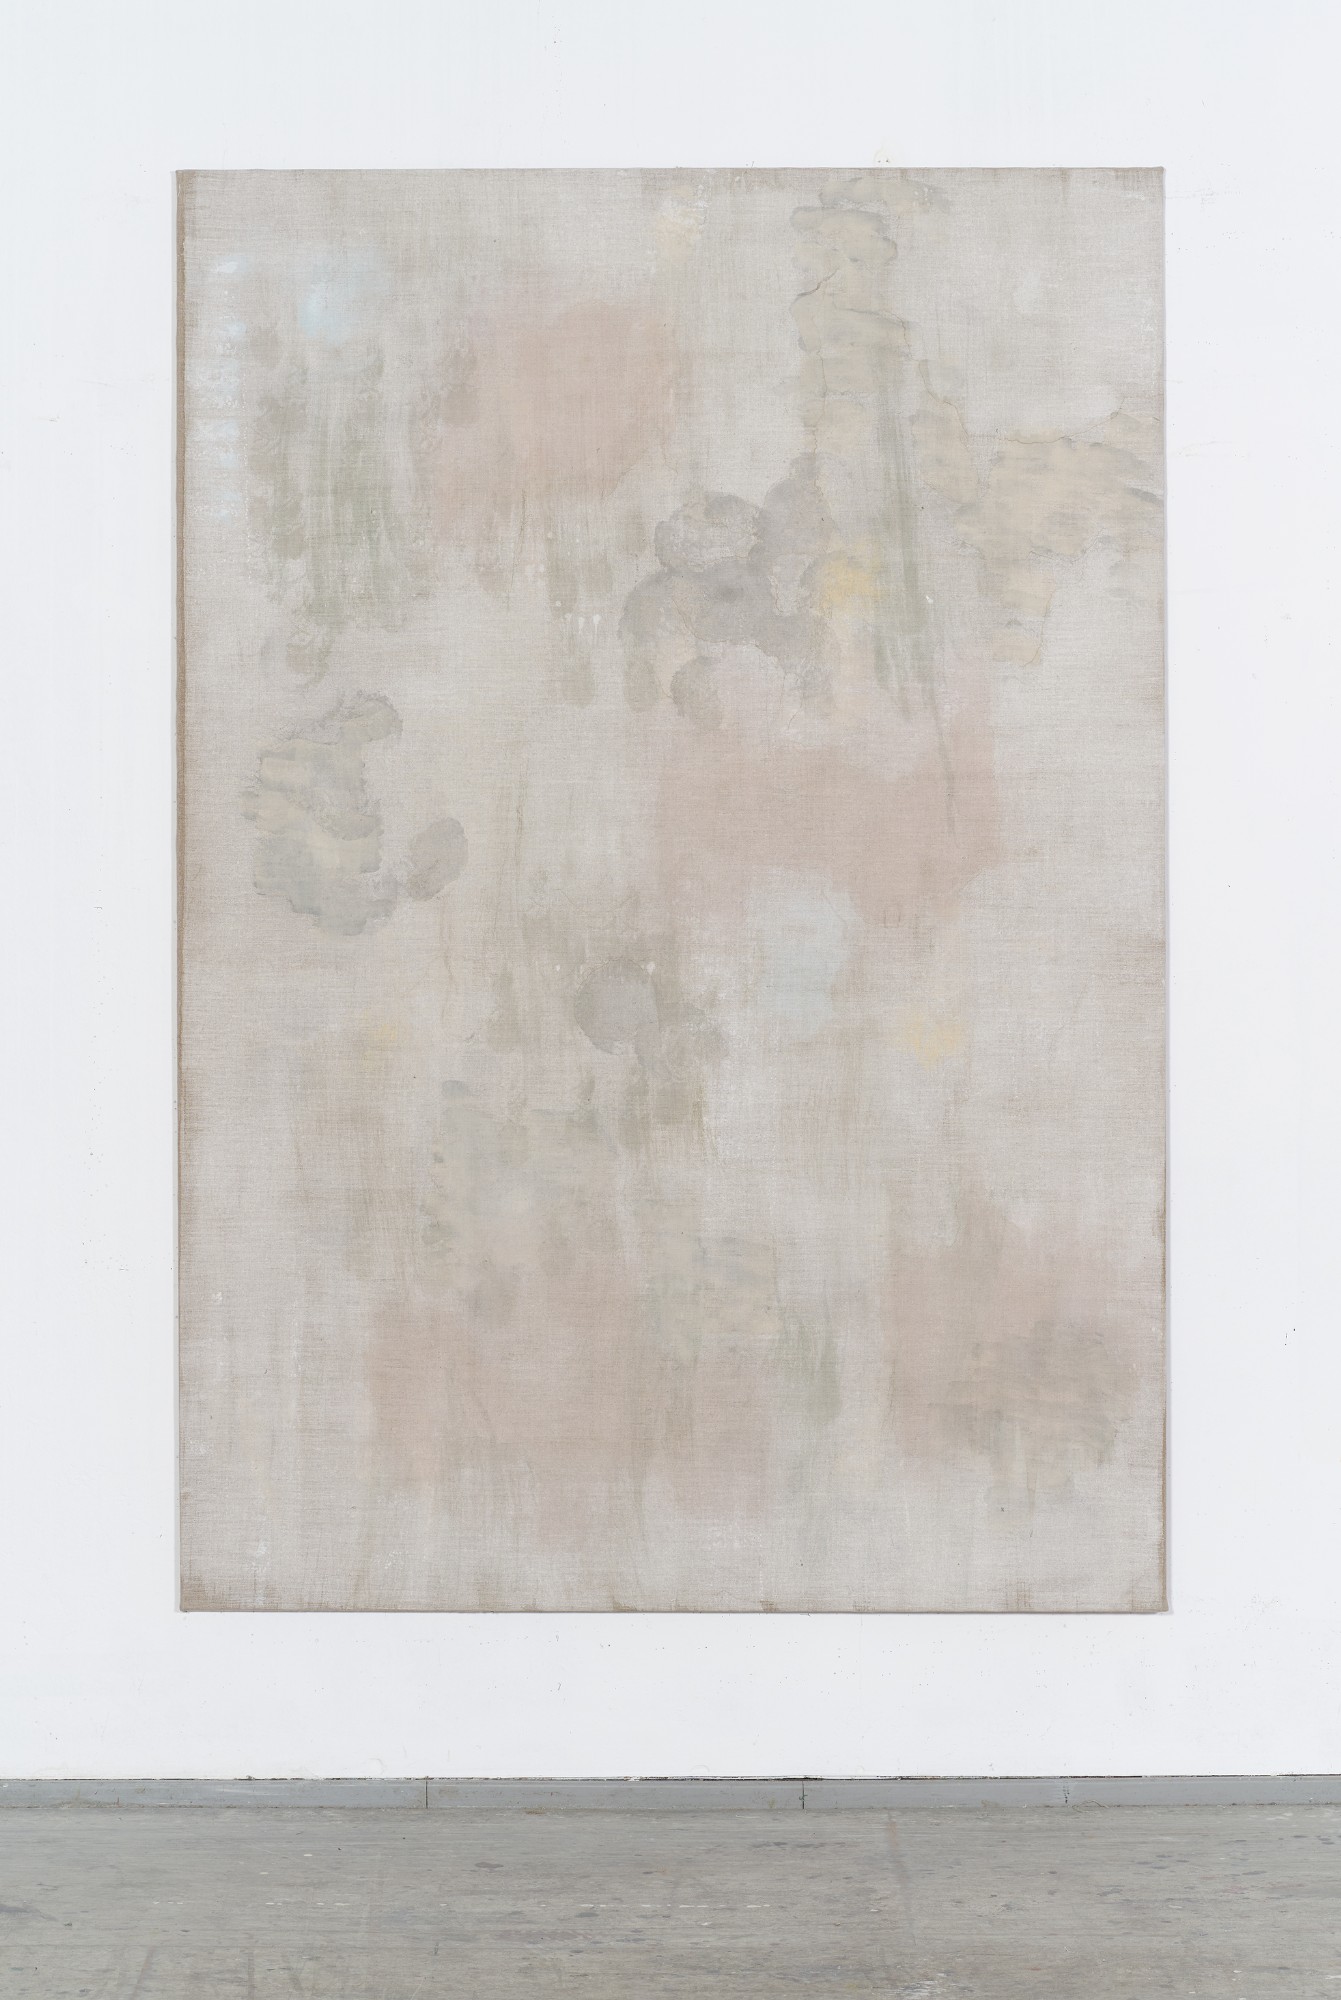 Erwin Gross, Jatropha 3, 2018, acrylic on canvas, 220 x 150 cm